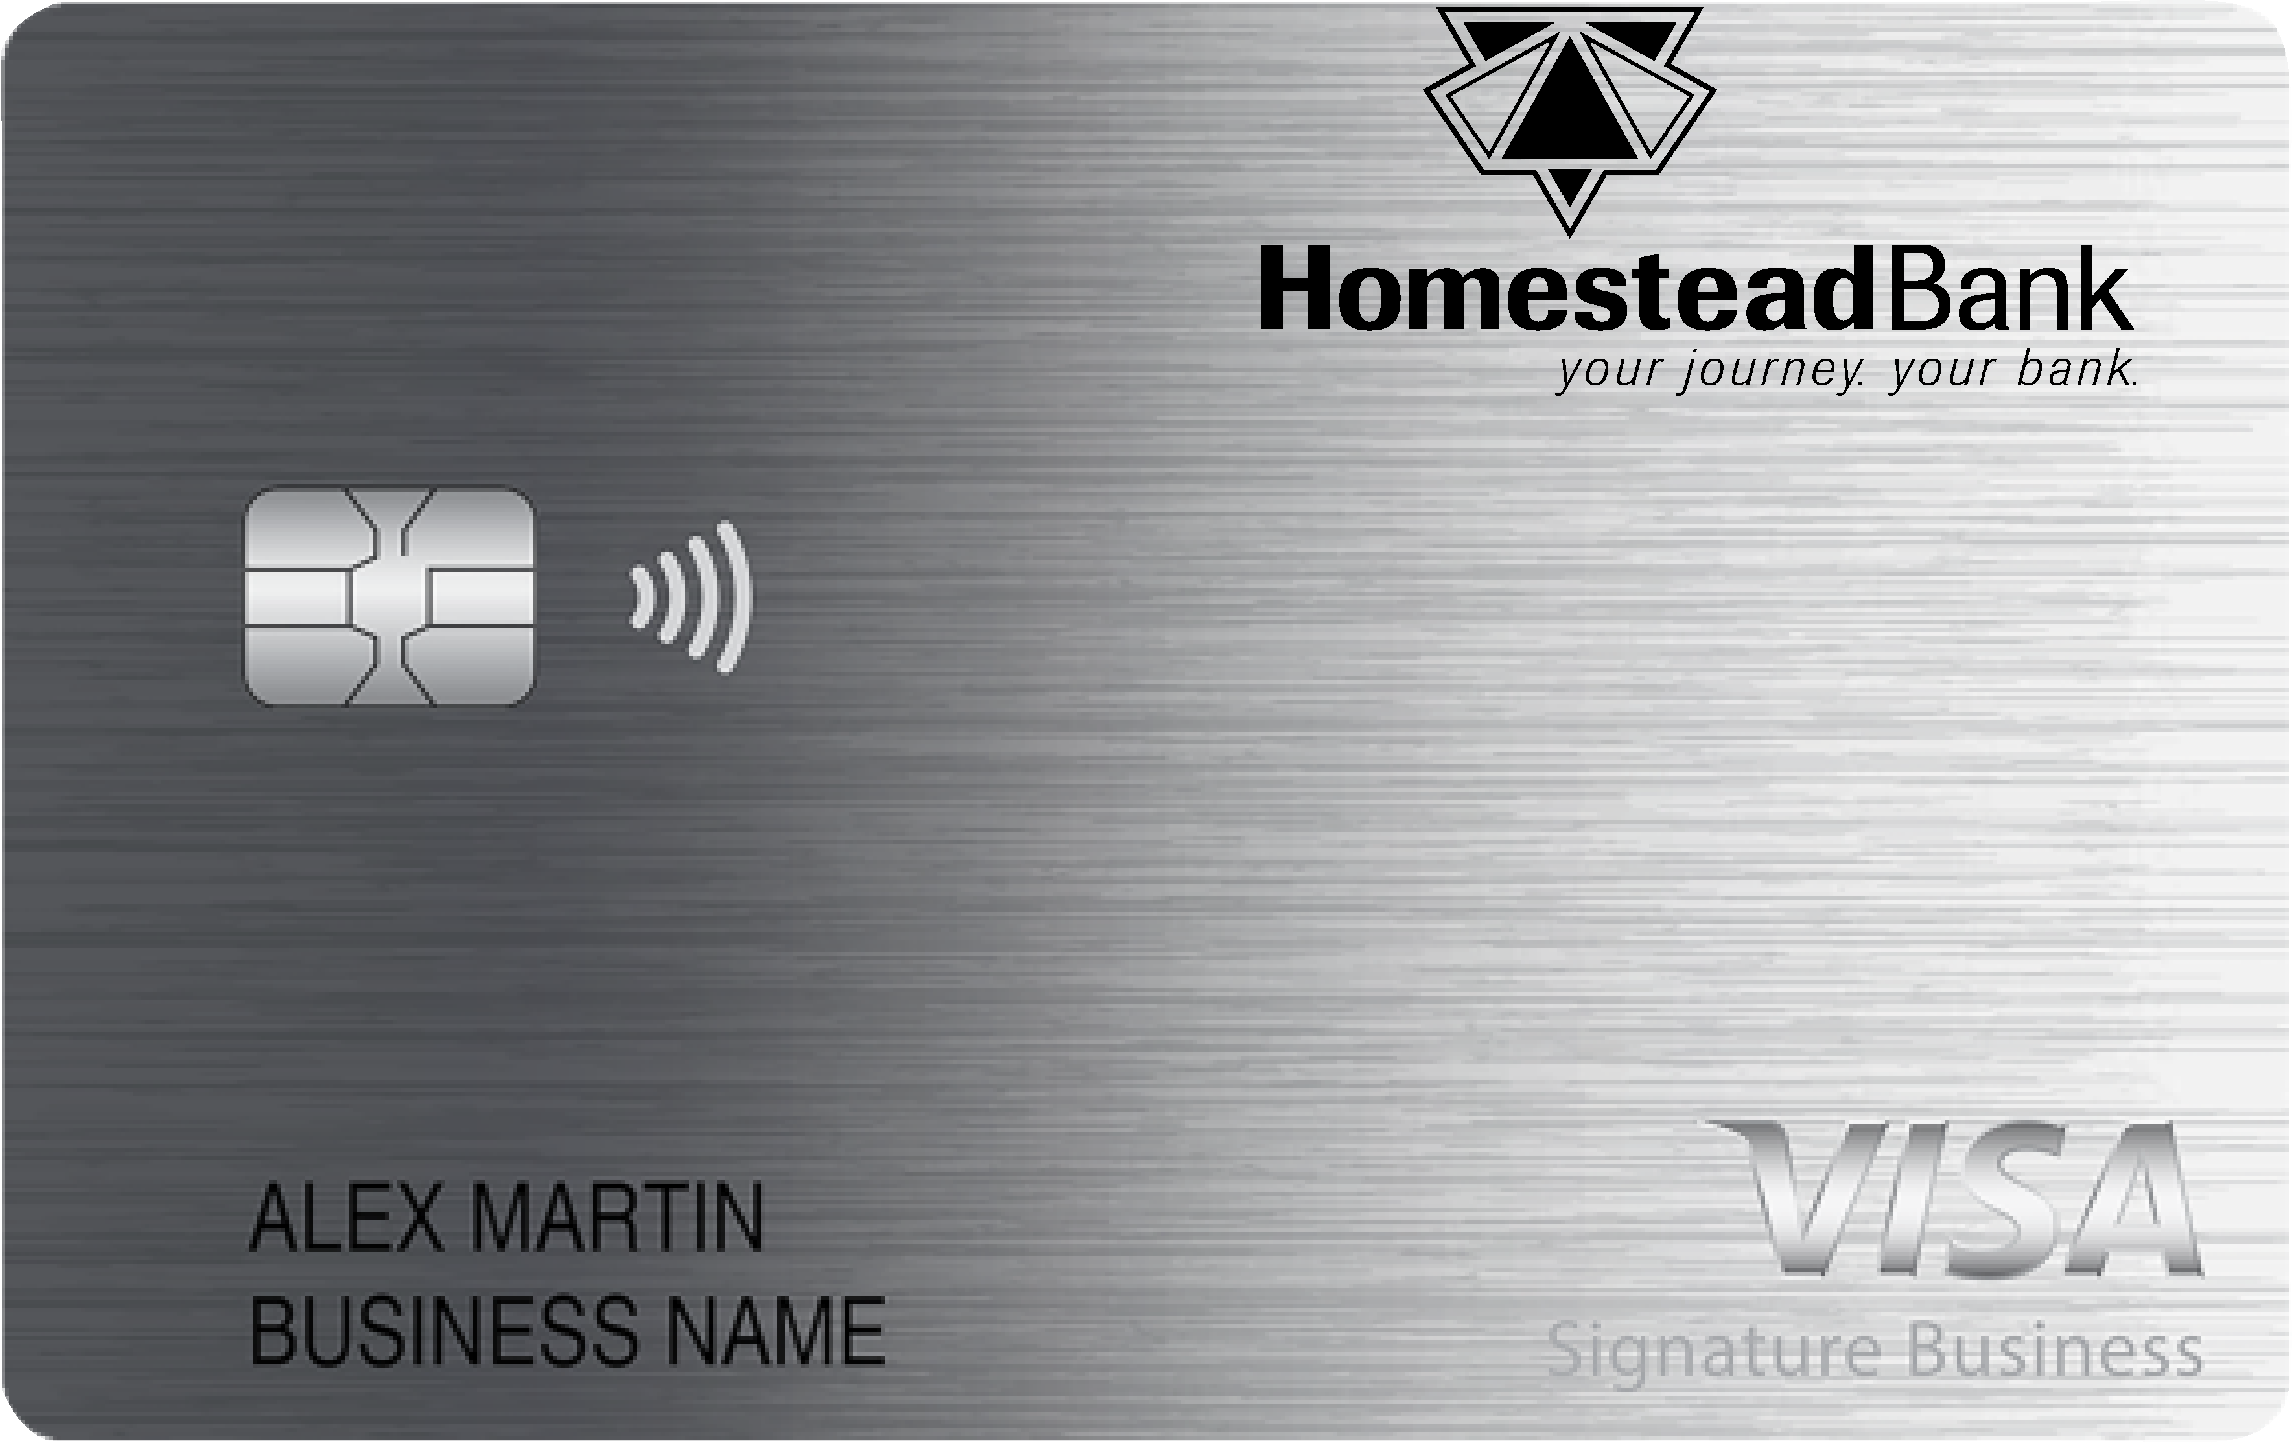 Homestead Bank Smart Business Rewards Card